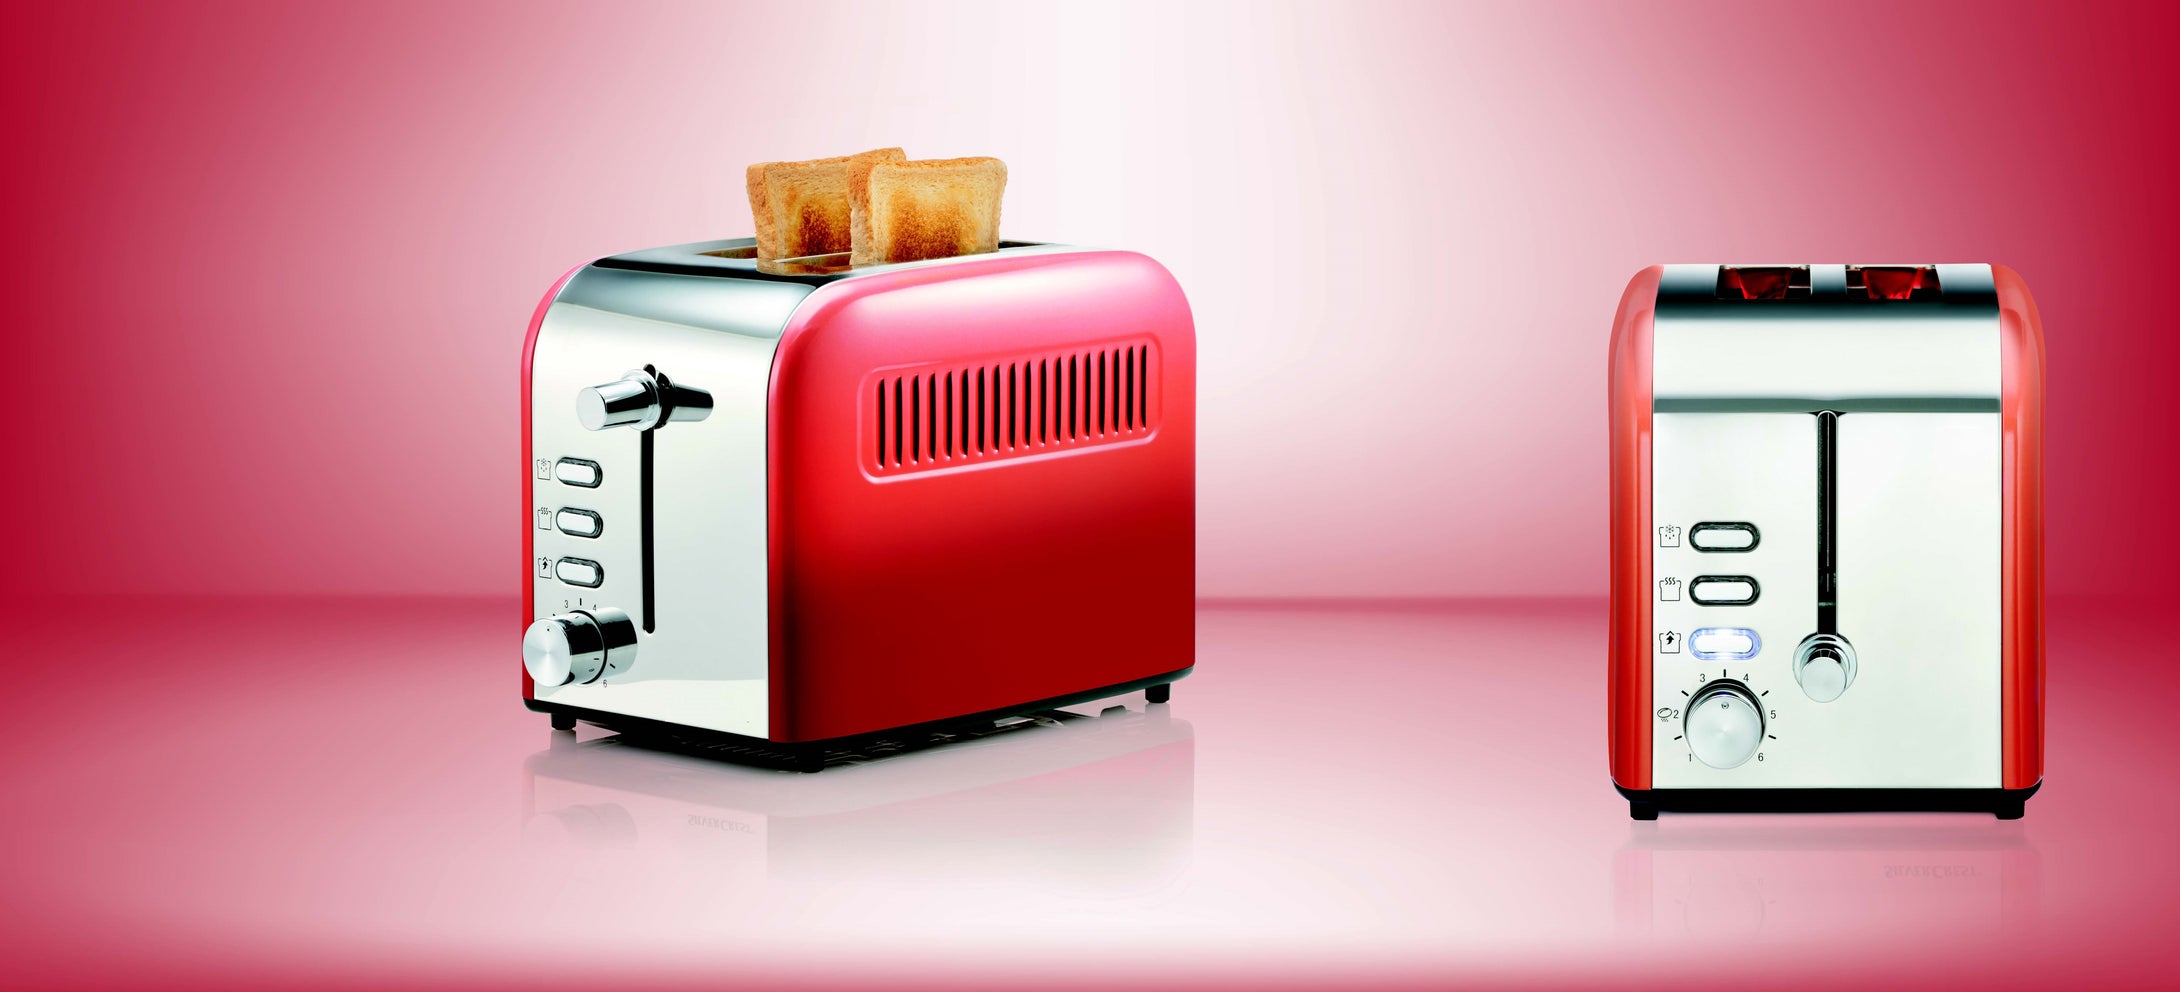 Toaster 740-920W